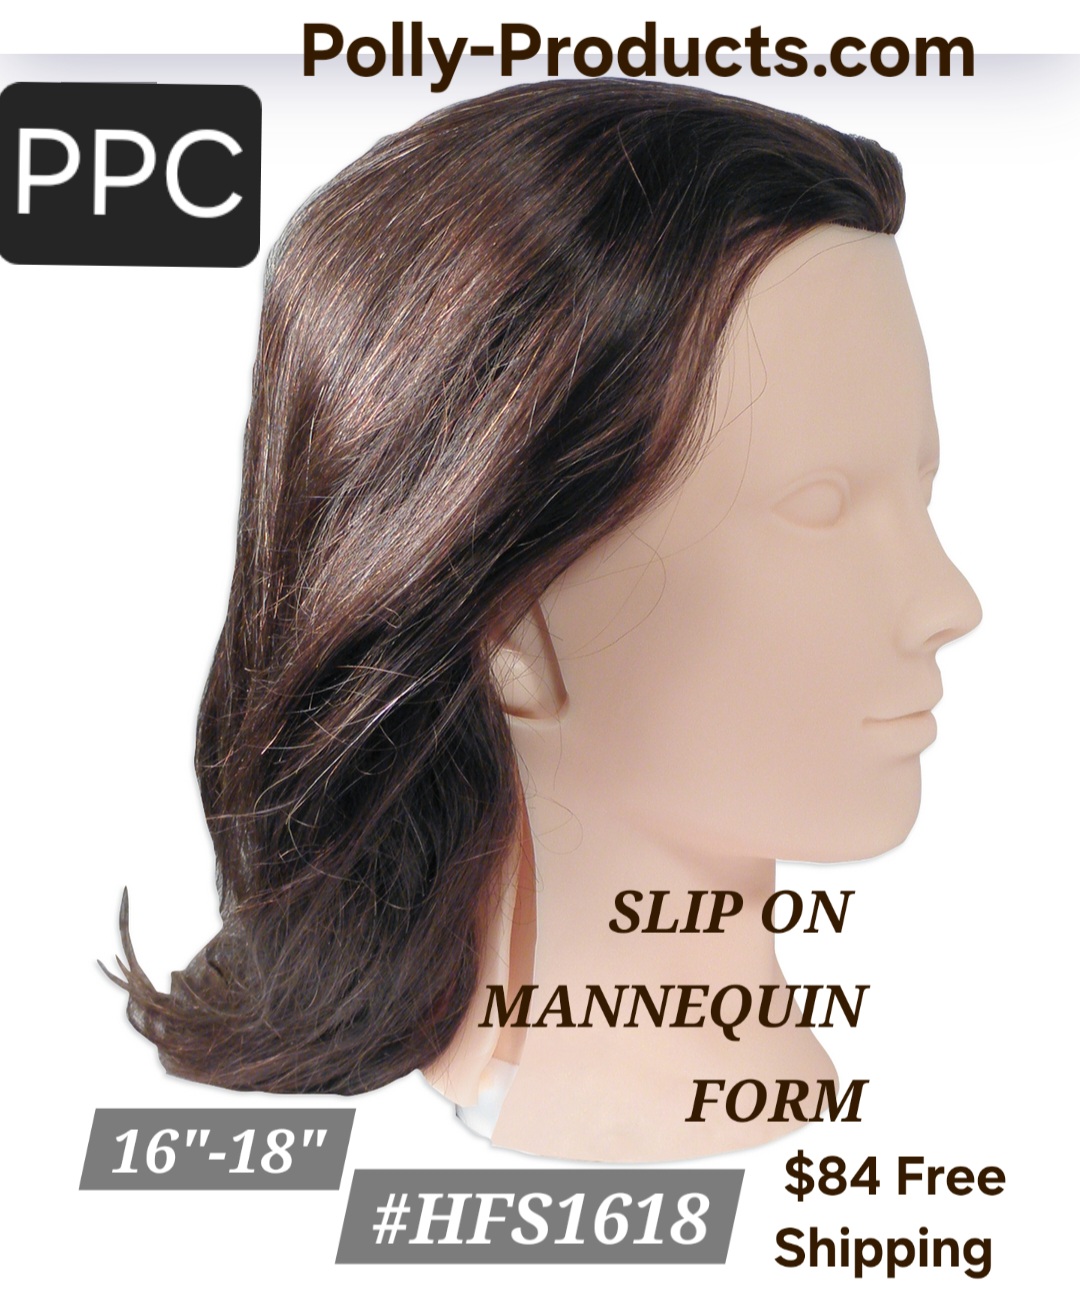 PPC SLIP ON MANNEQUIN FORM HFS1618